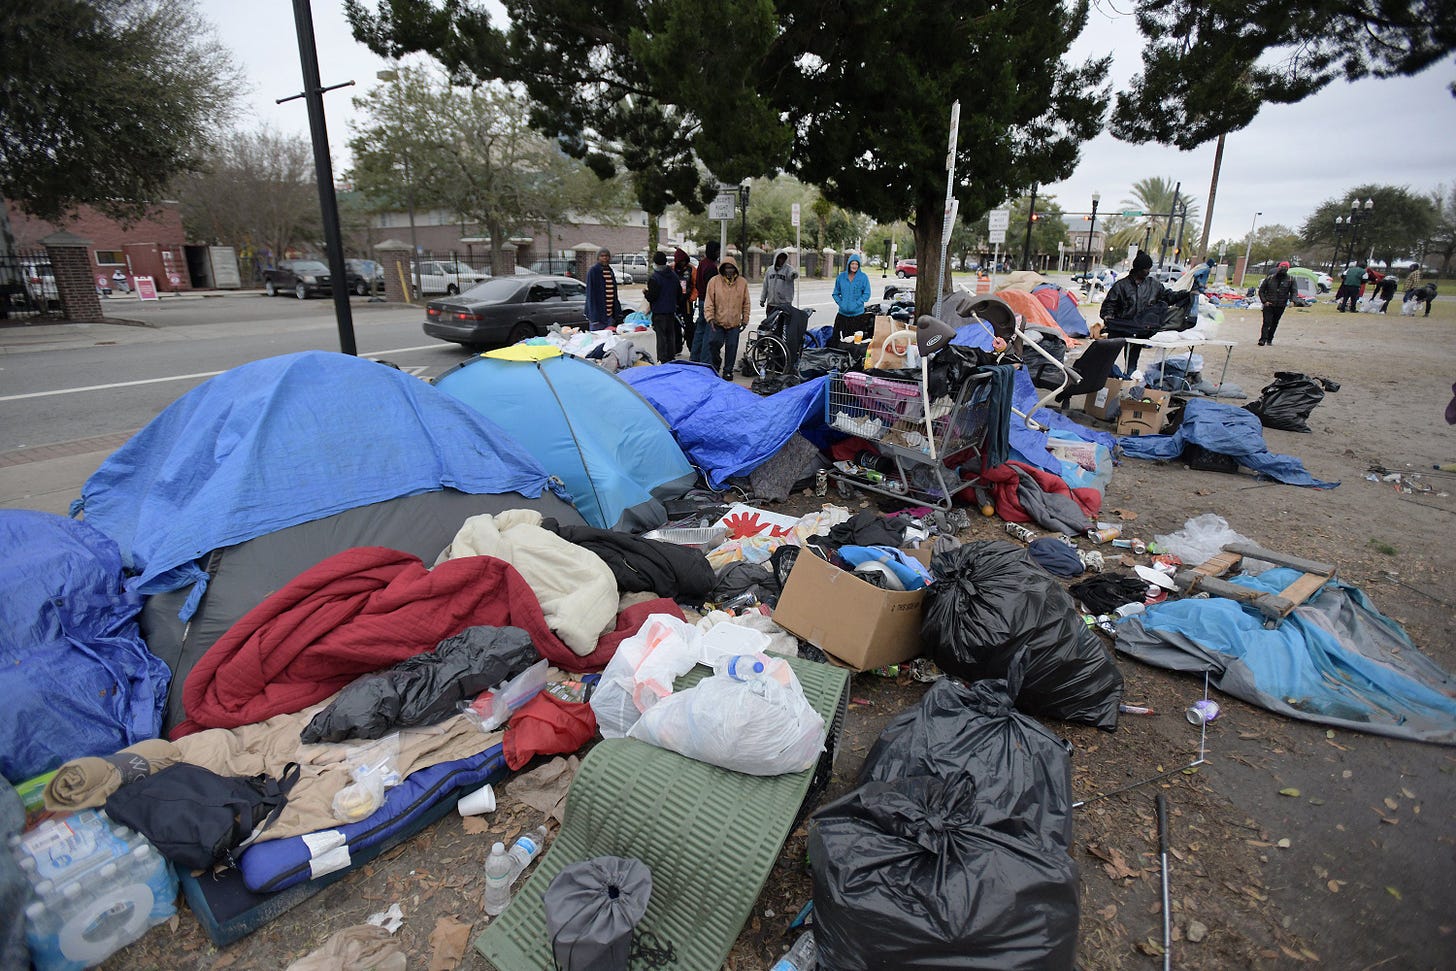 Downtown Jacksonville homeless camp targeted for 're-housing' effort